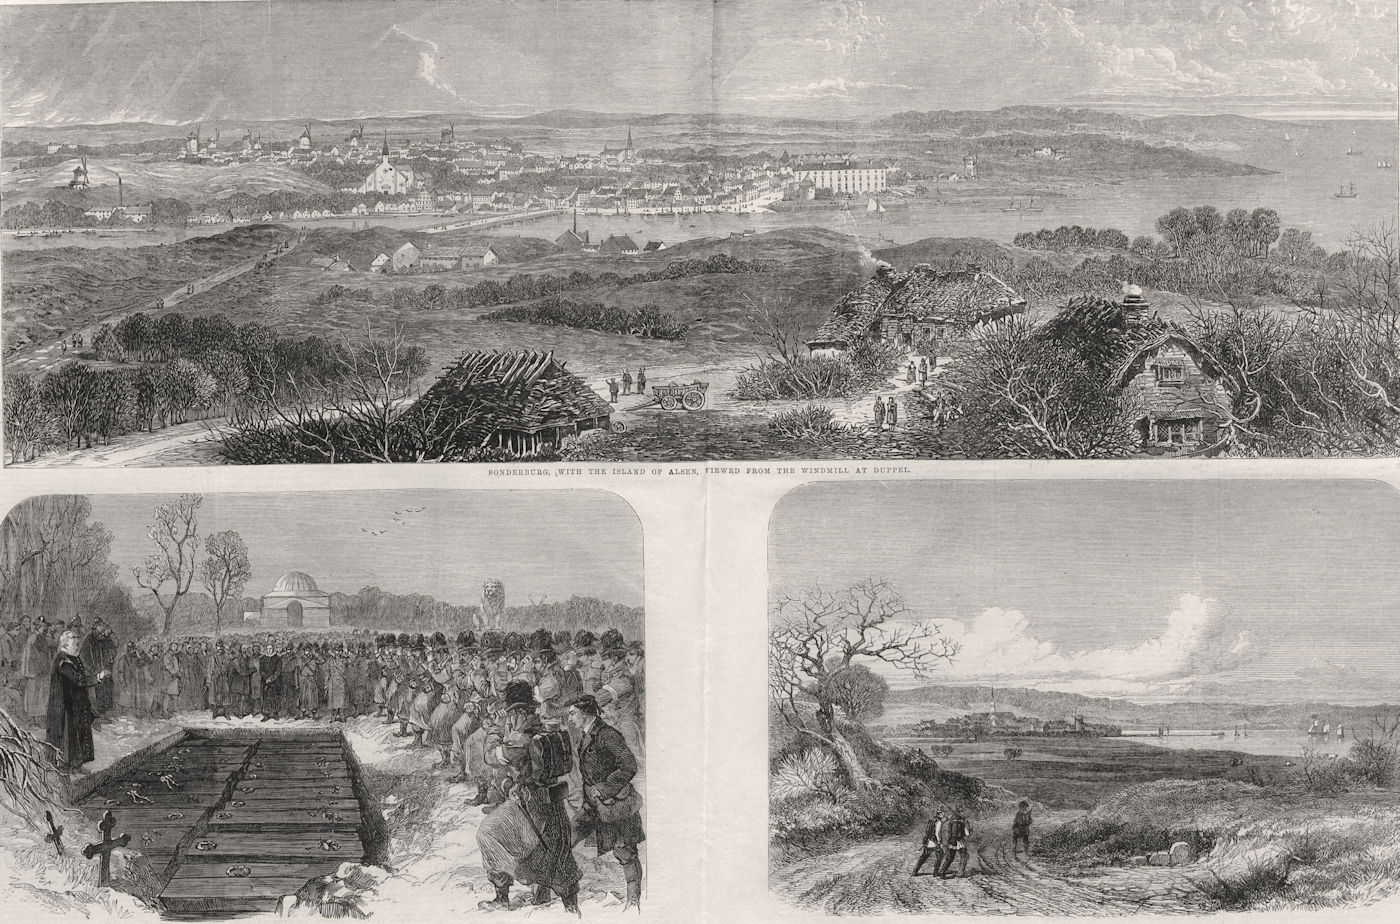 Associate Product 2nd Schleswig War: Sonderburg & Alsen island. Burying dead. Apenade Denmark 1864